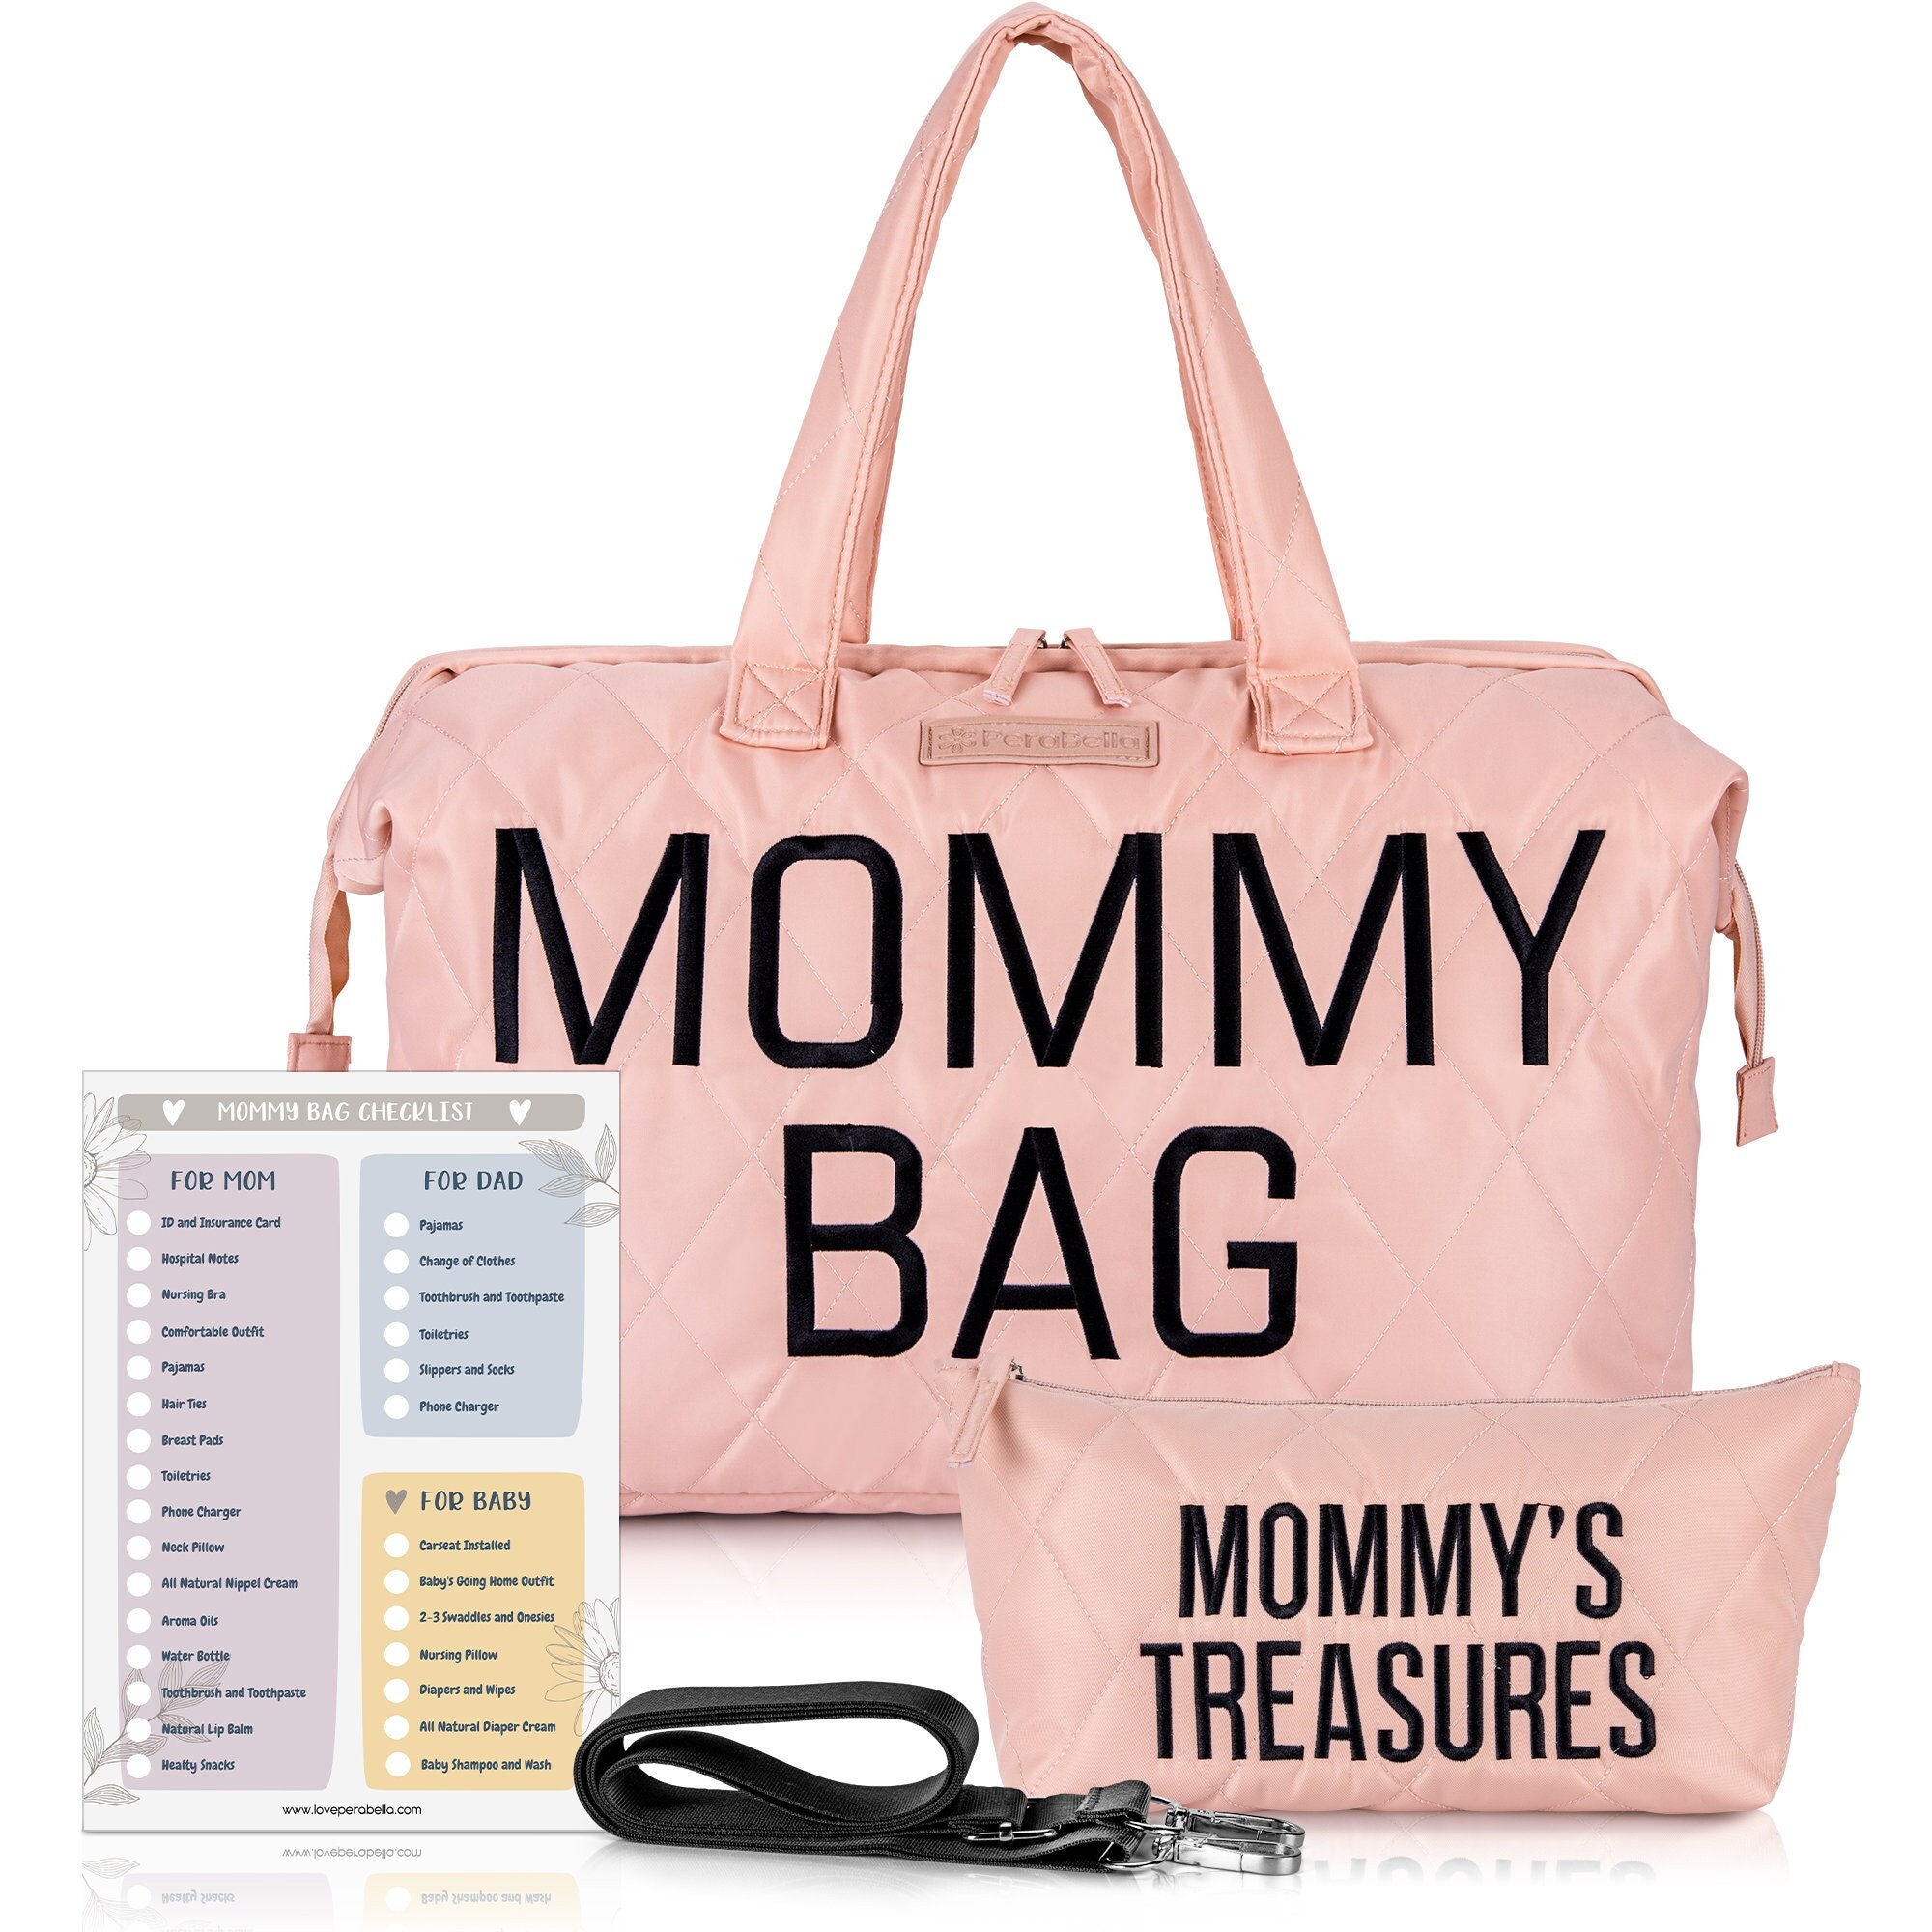 PeraBella Mommy Bag for Hospital,Mom Bag Diaper Bag Tote,Mommy